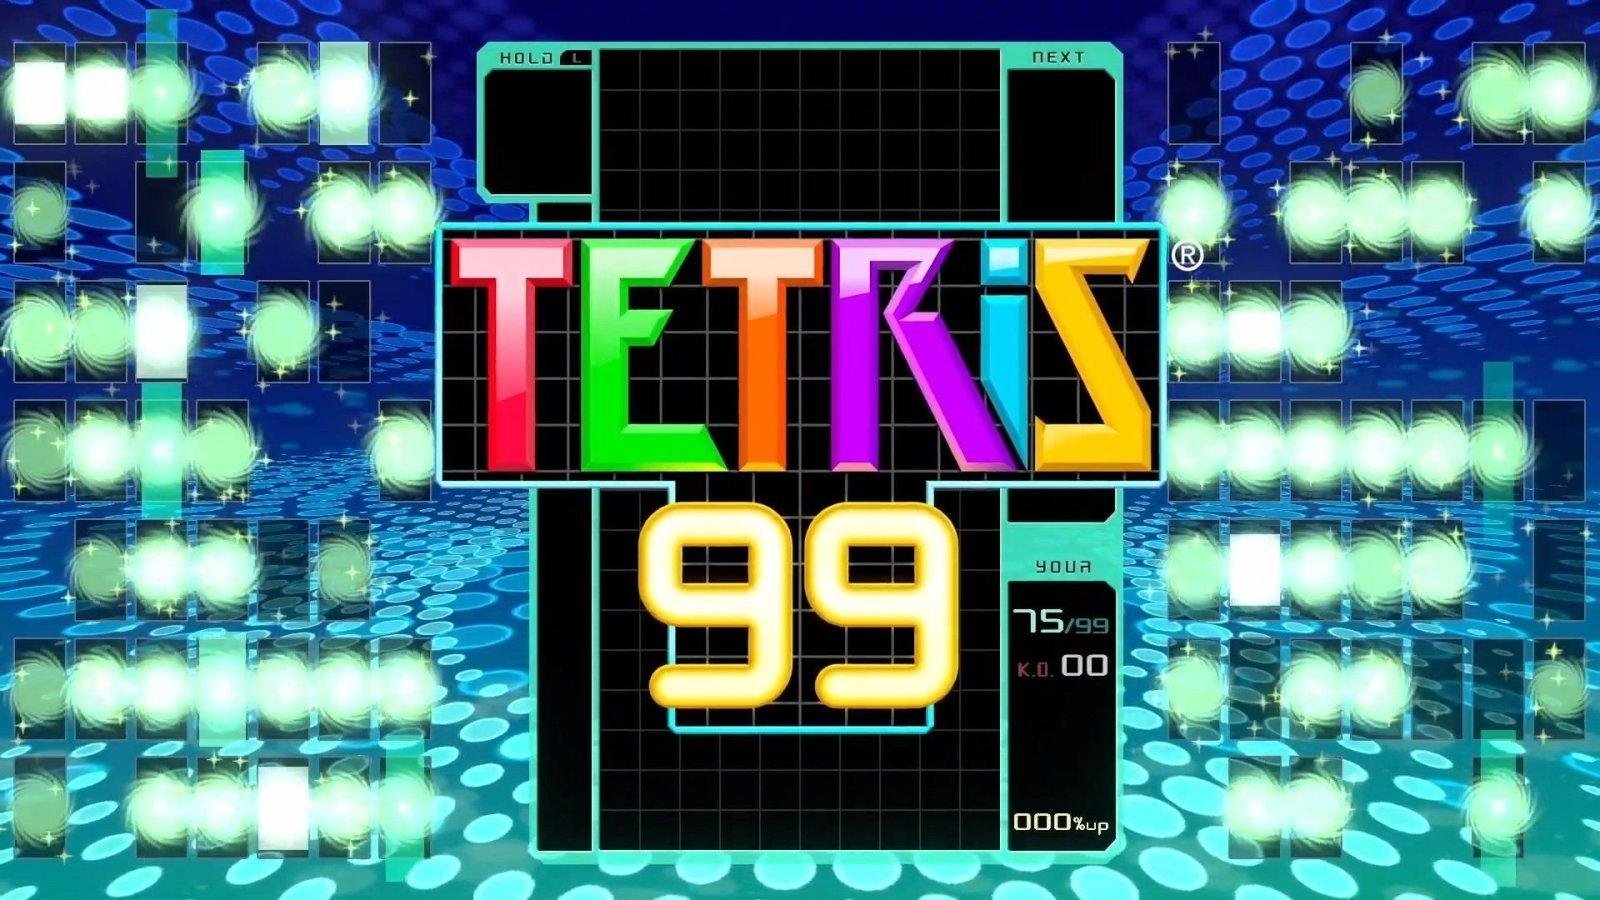 Tetris 99, la prossima Maximus Cup regalerà un tema dedicato ad Animal Crossing: New Horizons